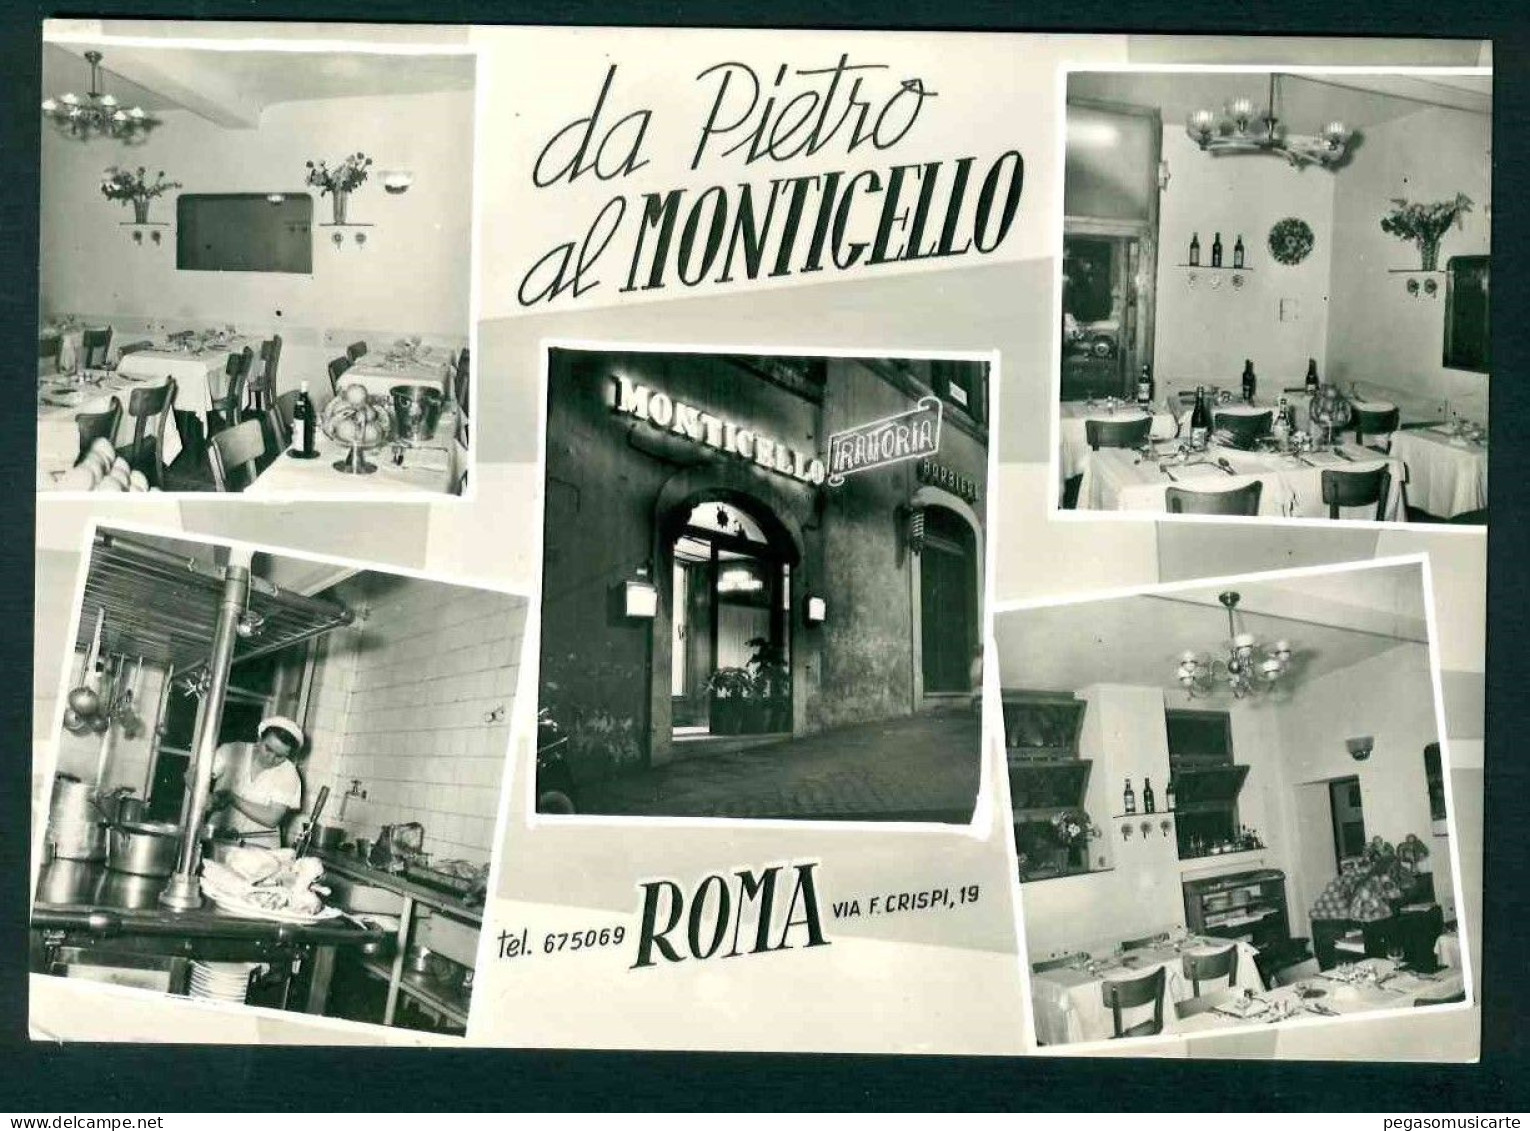 MT349 - DA PIETRO AL MONTICELLO - ROMA - 5 VEDUTE - RISTORANTE - Bares, Hoteles Y Restaurantes